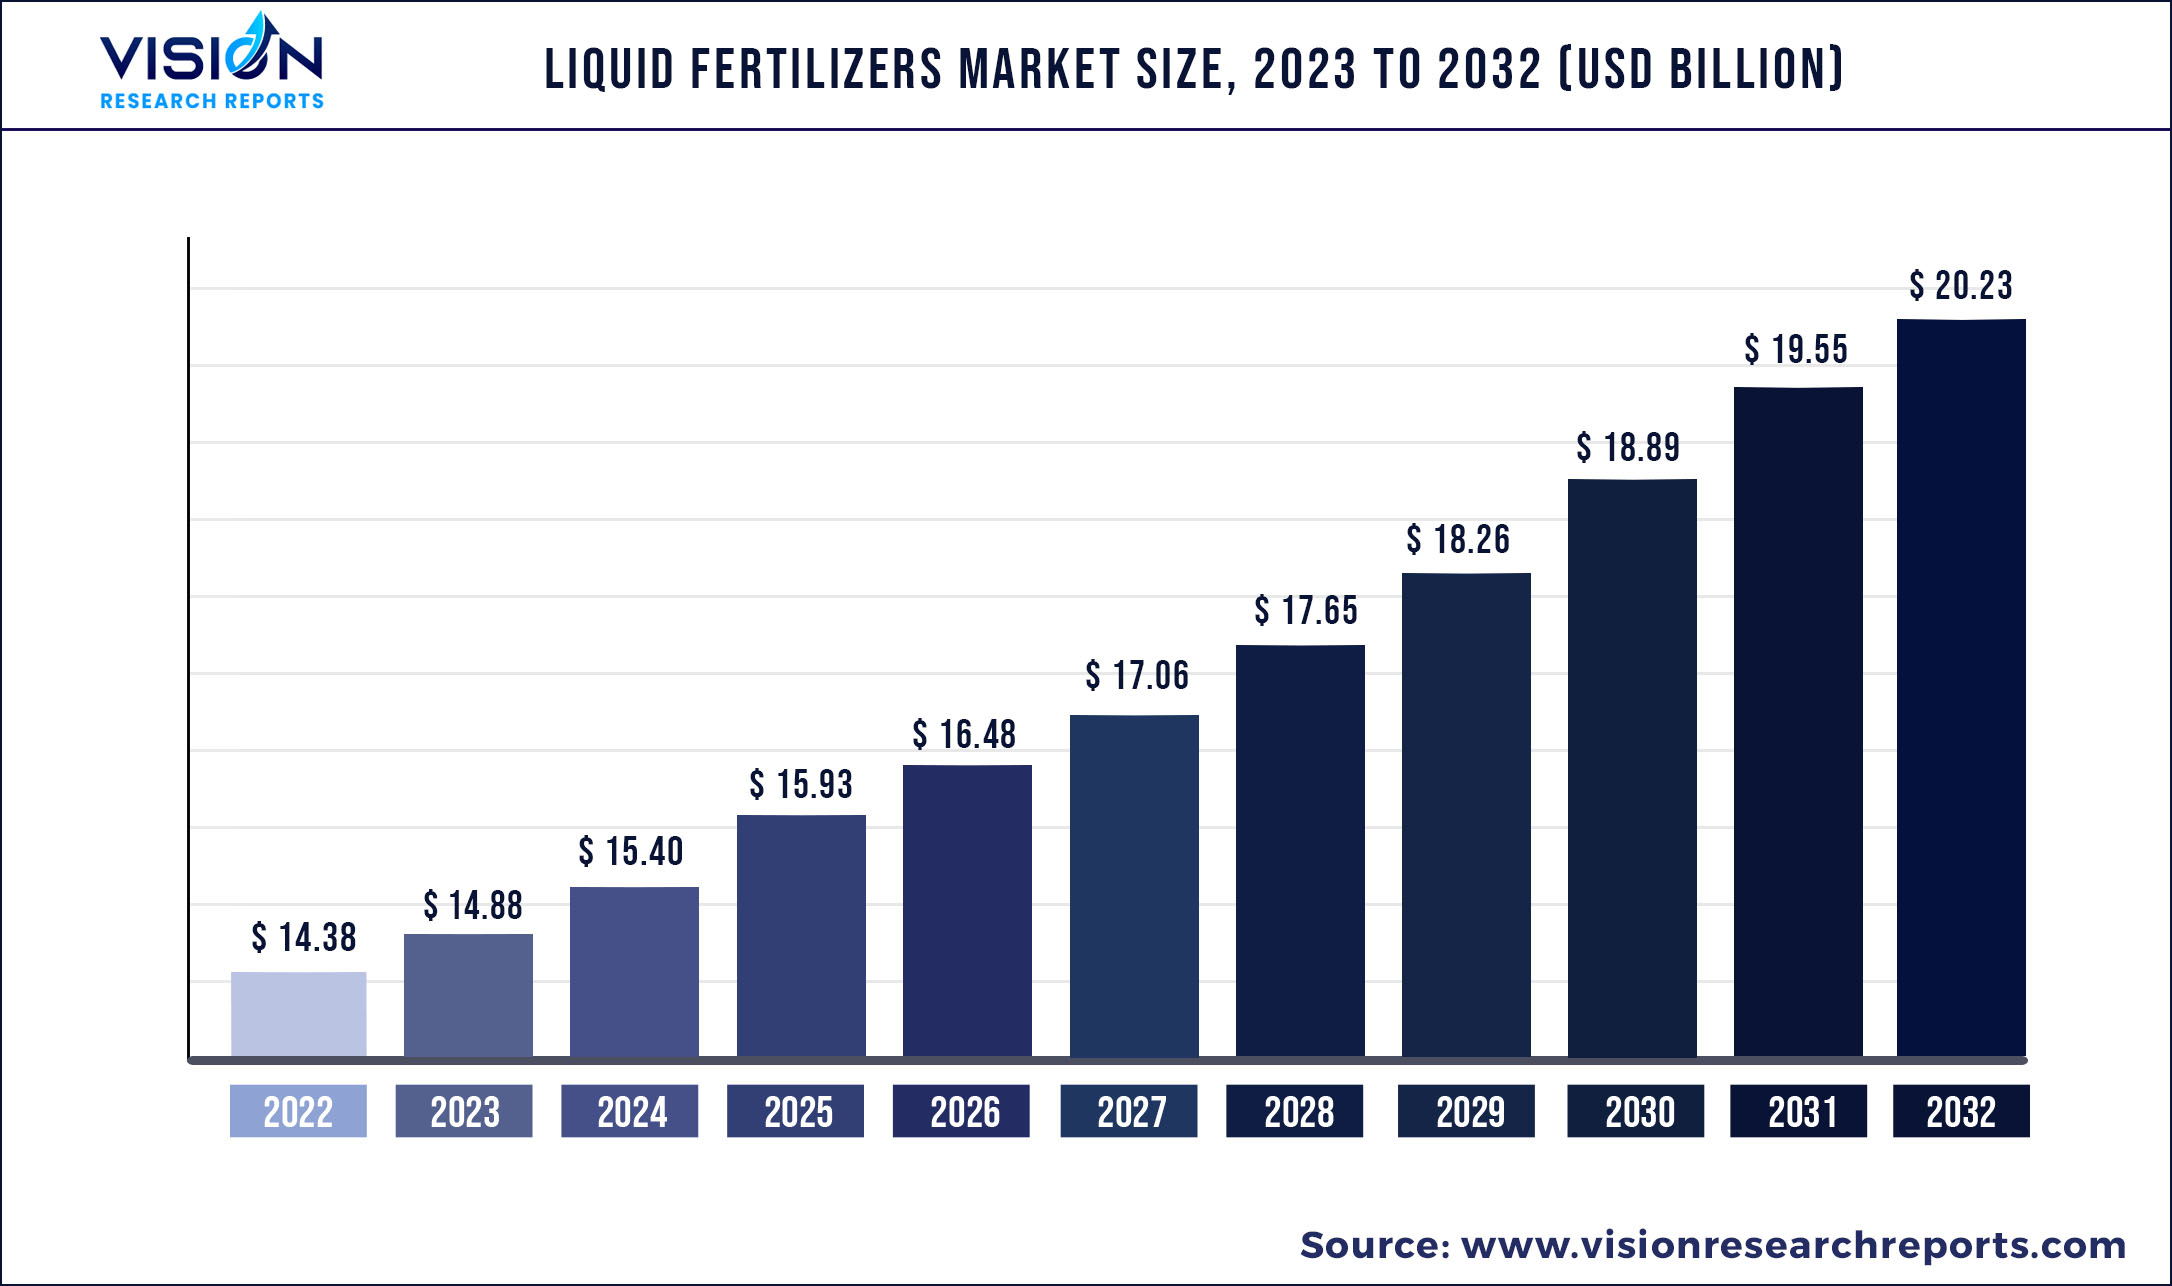 Liquid Fertilizers Market Size 2023 to 2032